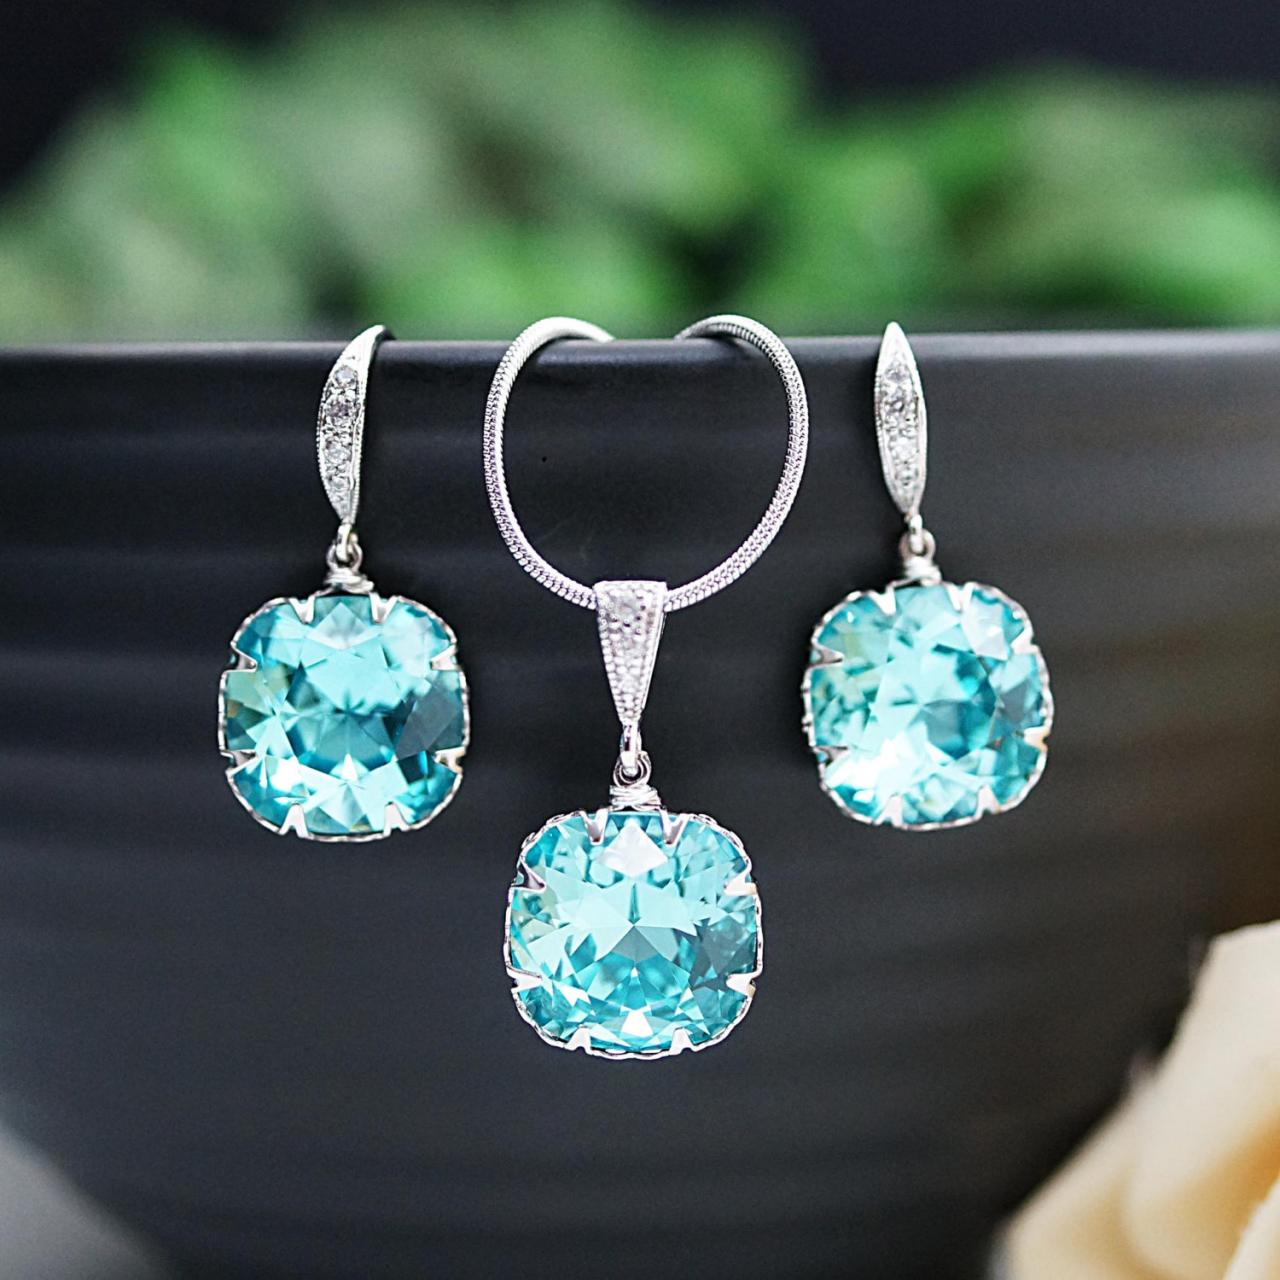 Weddings Bridesmaid Gifts Bridesmaid Earrings Light Turquoise Swarovski Crystal Square Drops Jewelry Sets Dangle Earrings